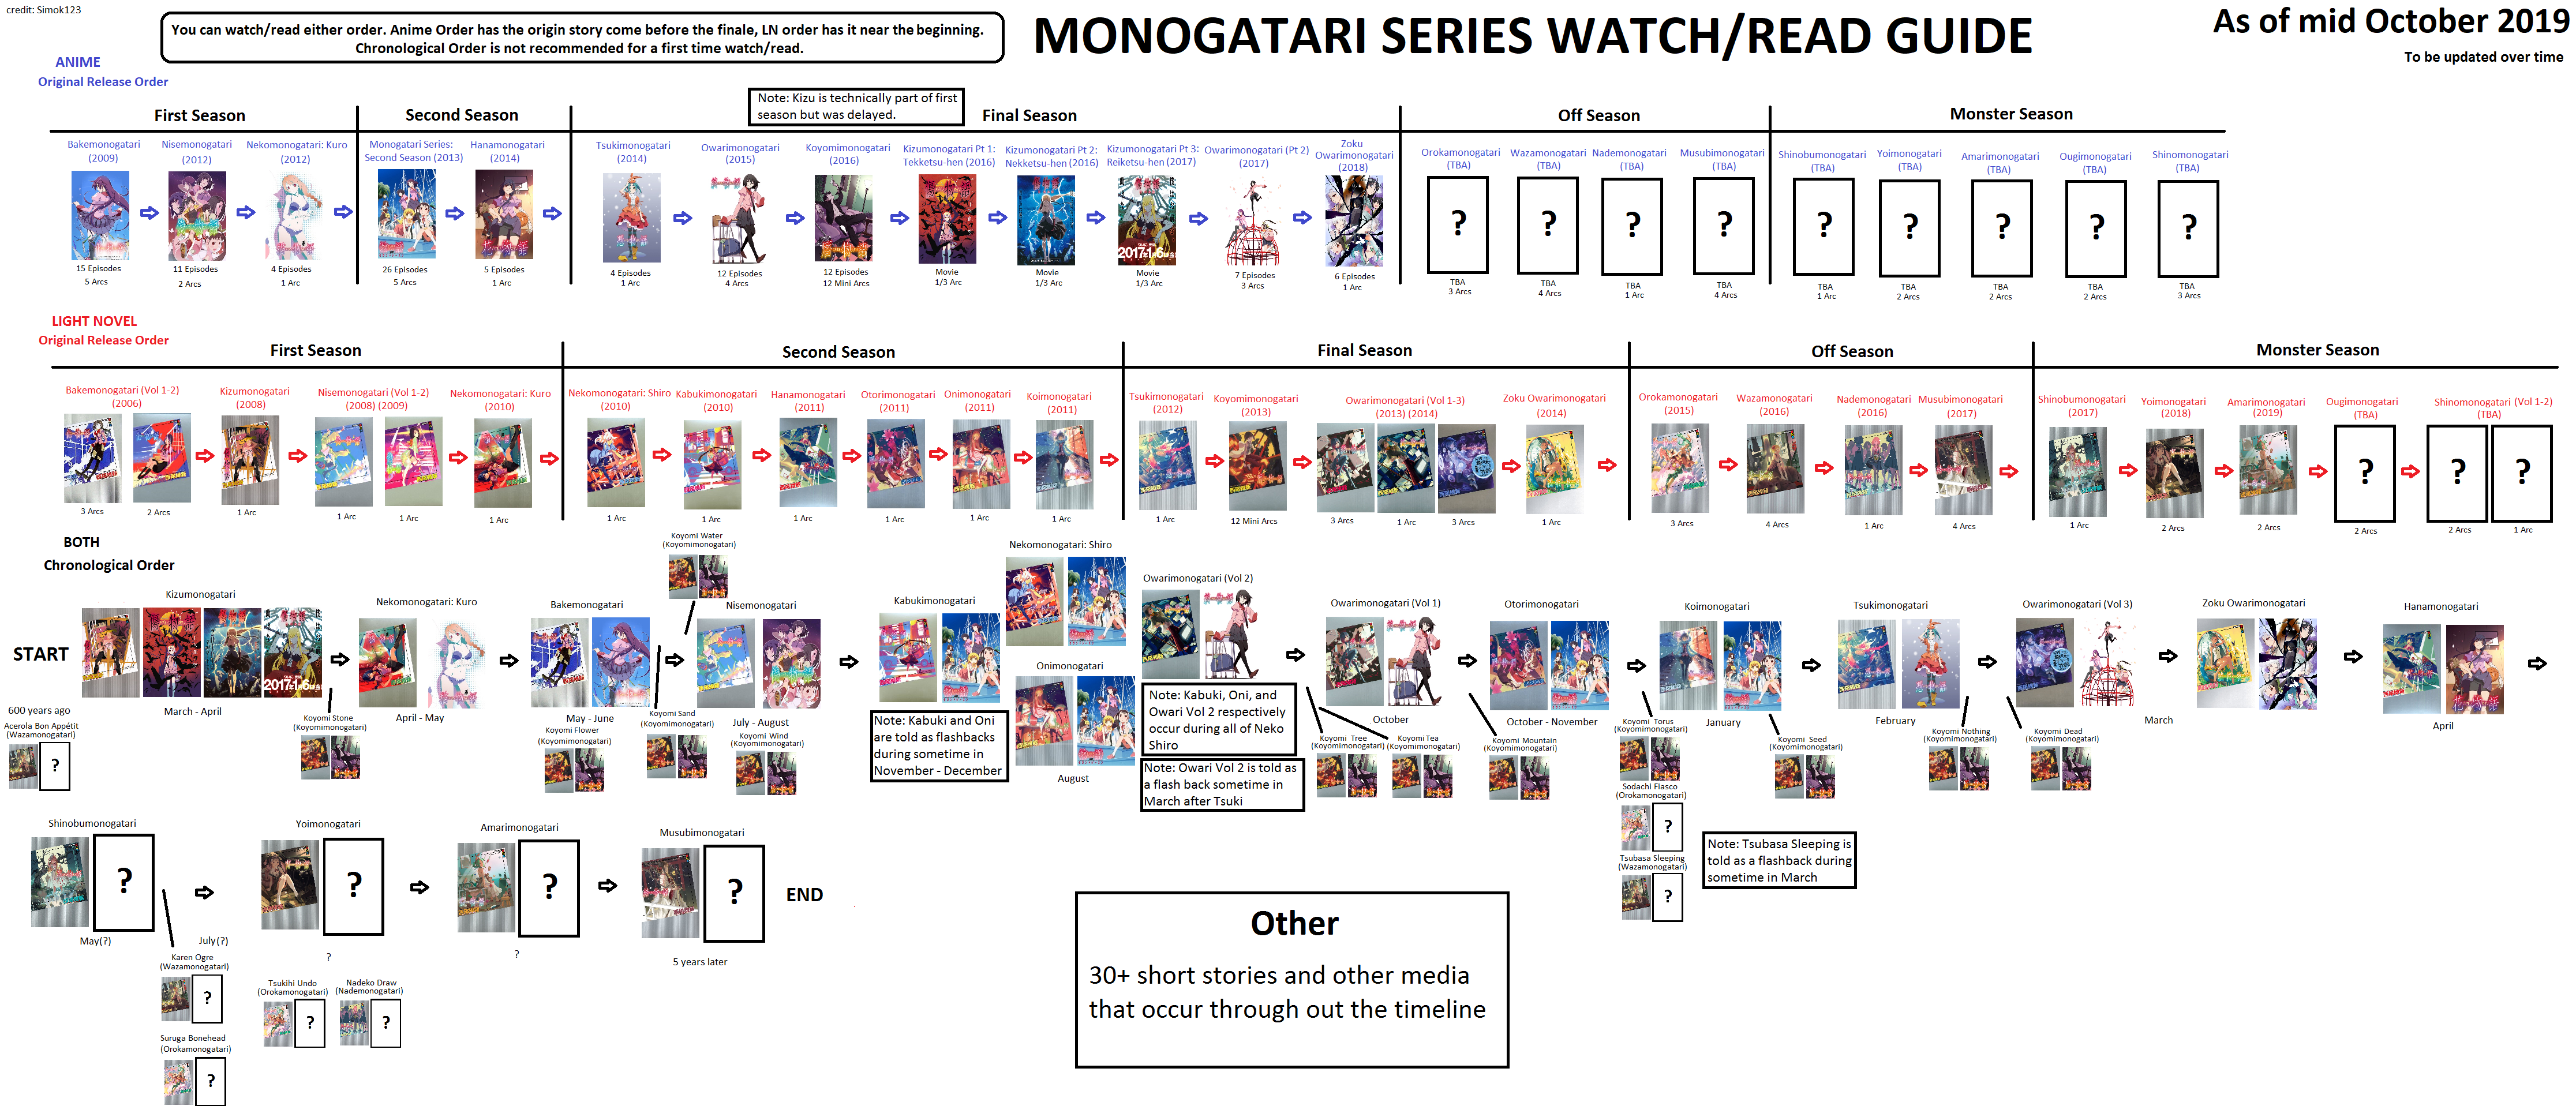 Monogatari Watch Order